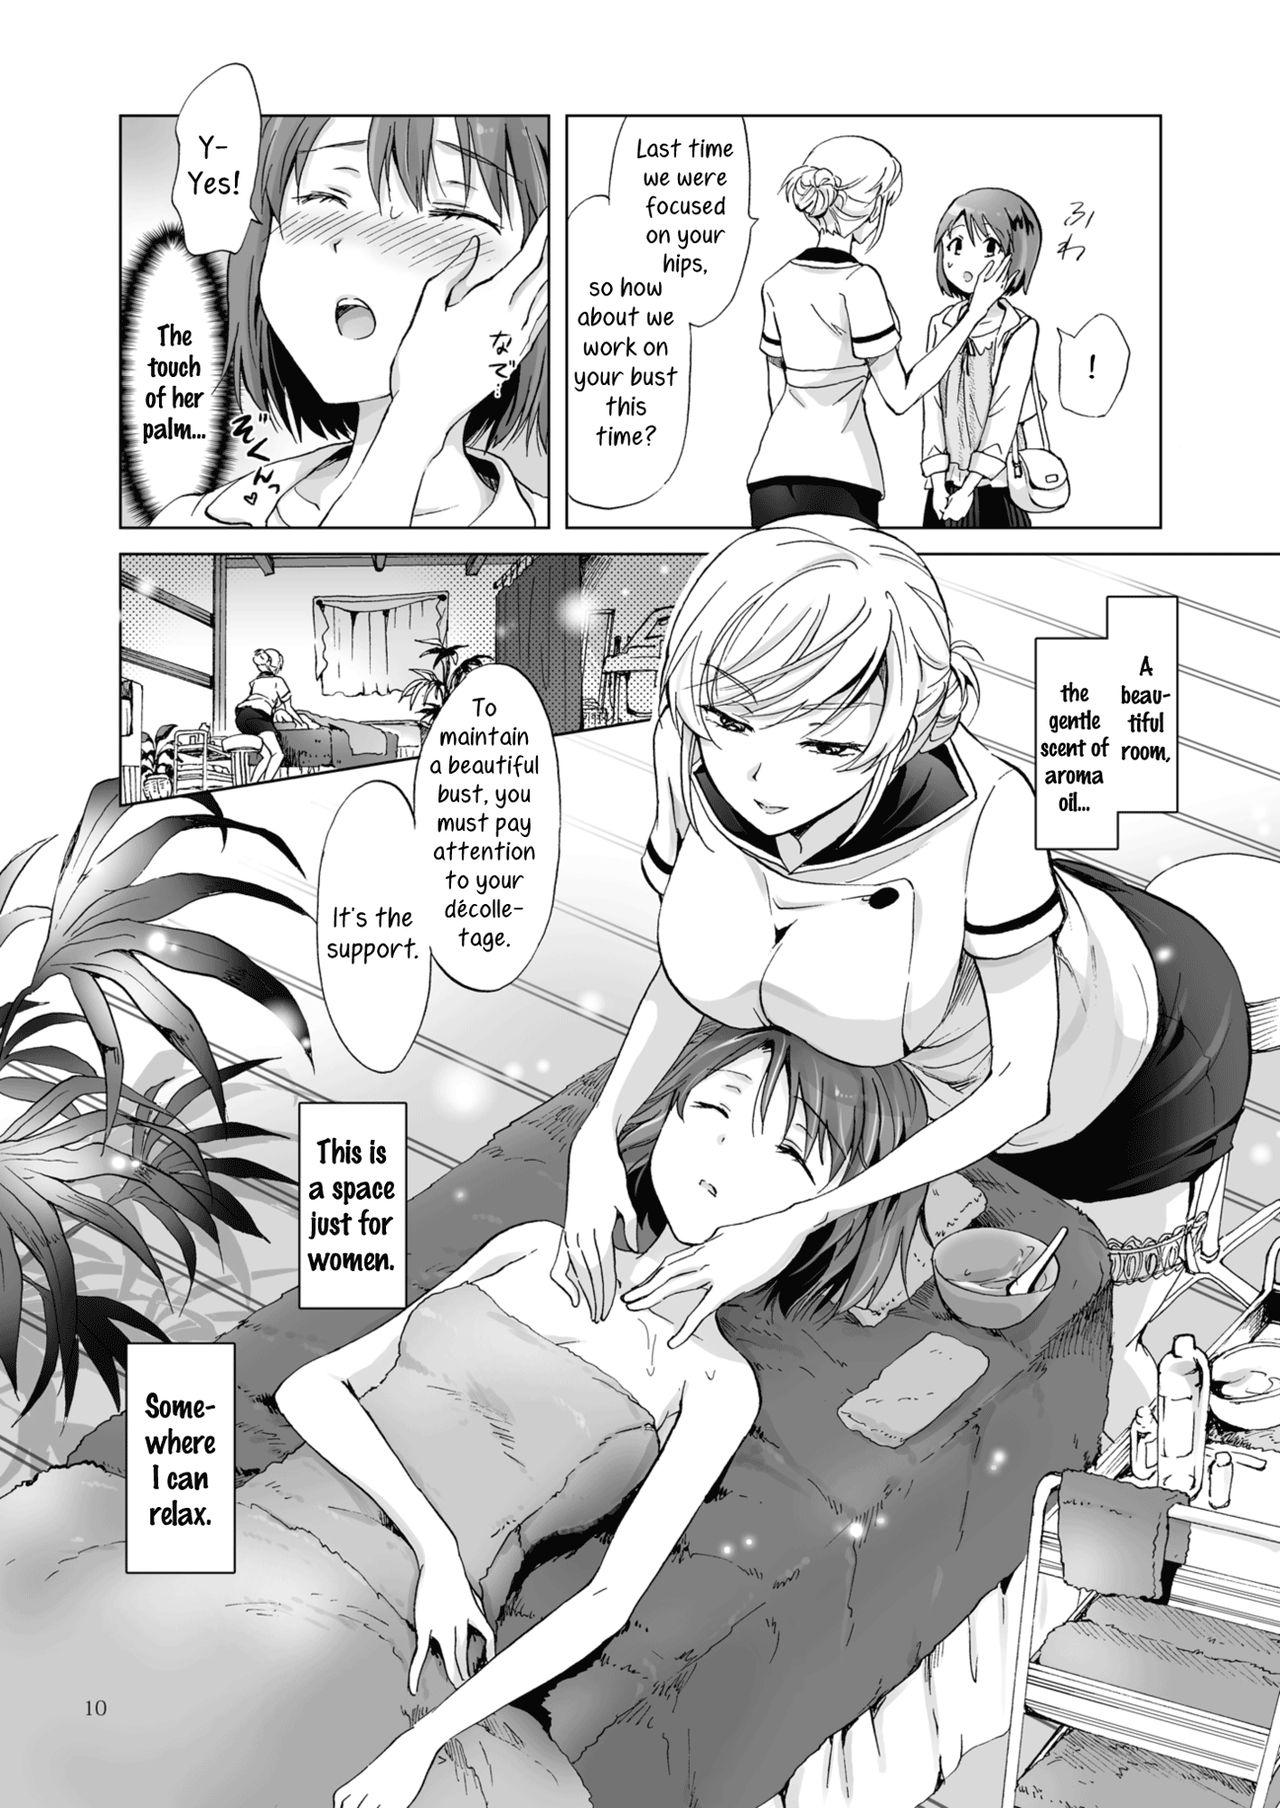 Whore Himitsu no Yuri Esthe Friend Course | Secret Yuri Salon, Friends Course Stockings - Page 10